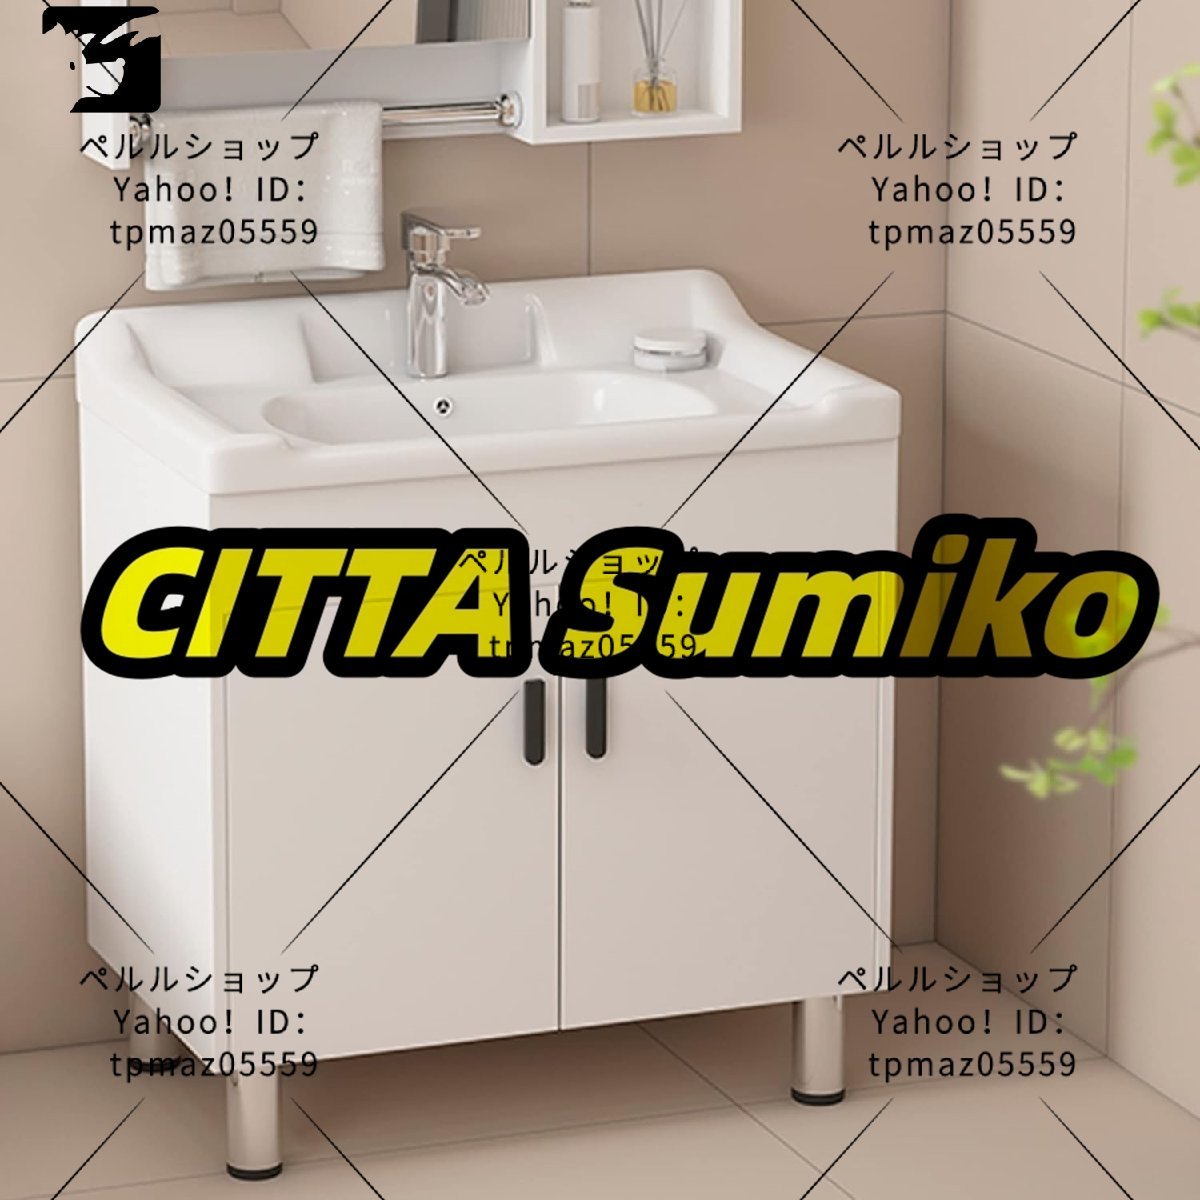  cabinet attaching laundry sink ceramic laundry bathtub utility sink . cabinet combo :61x48x80cm